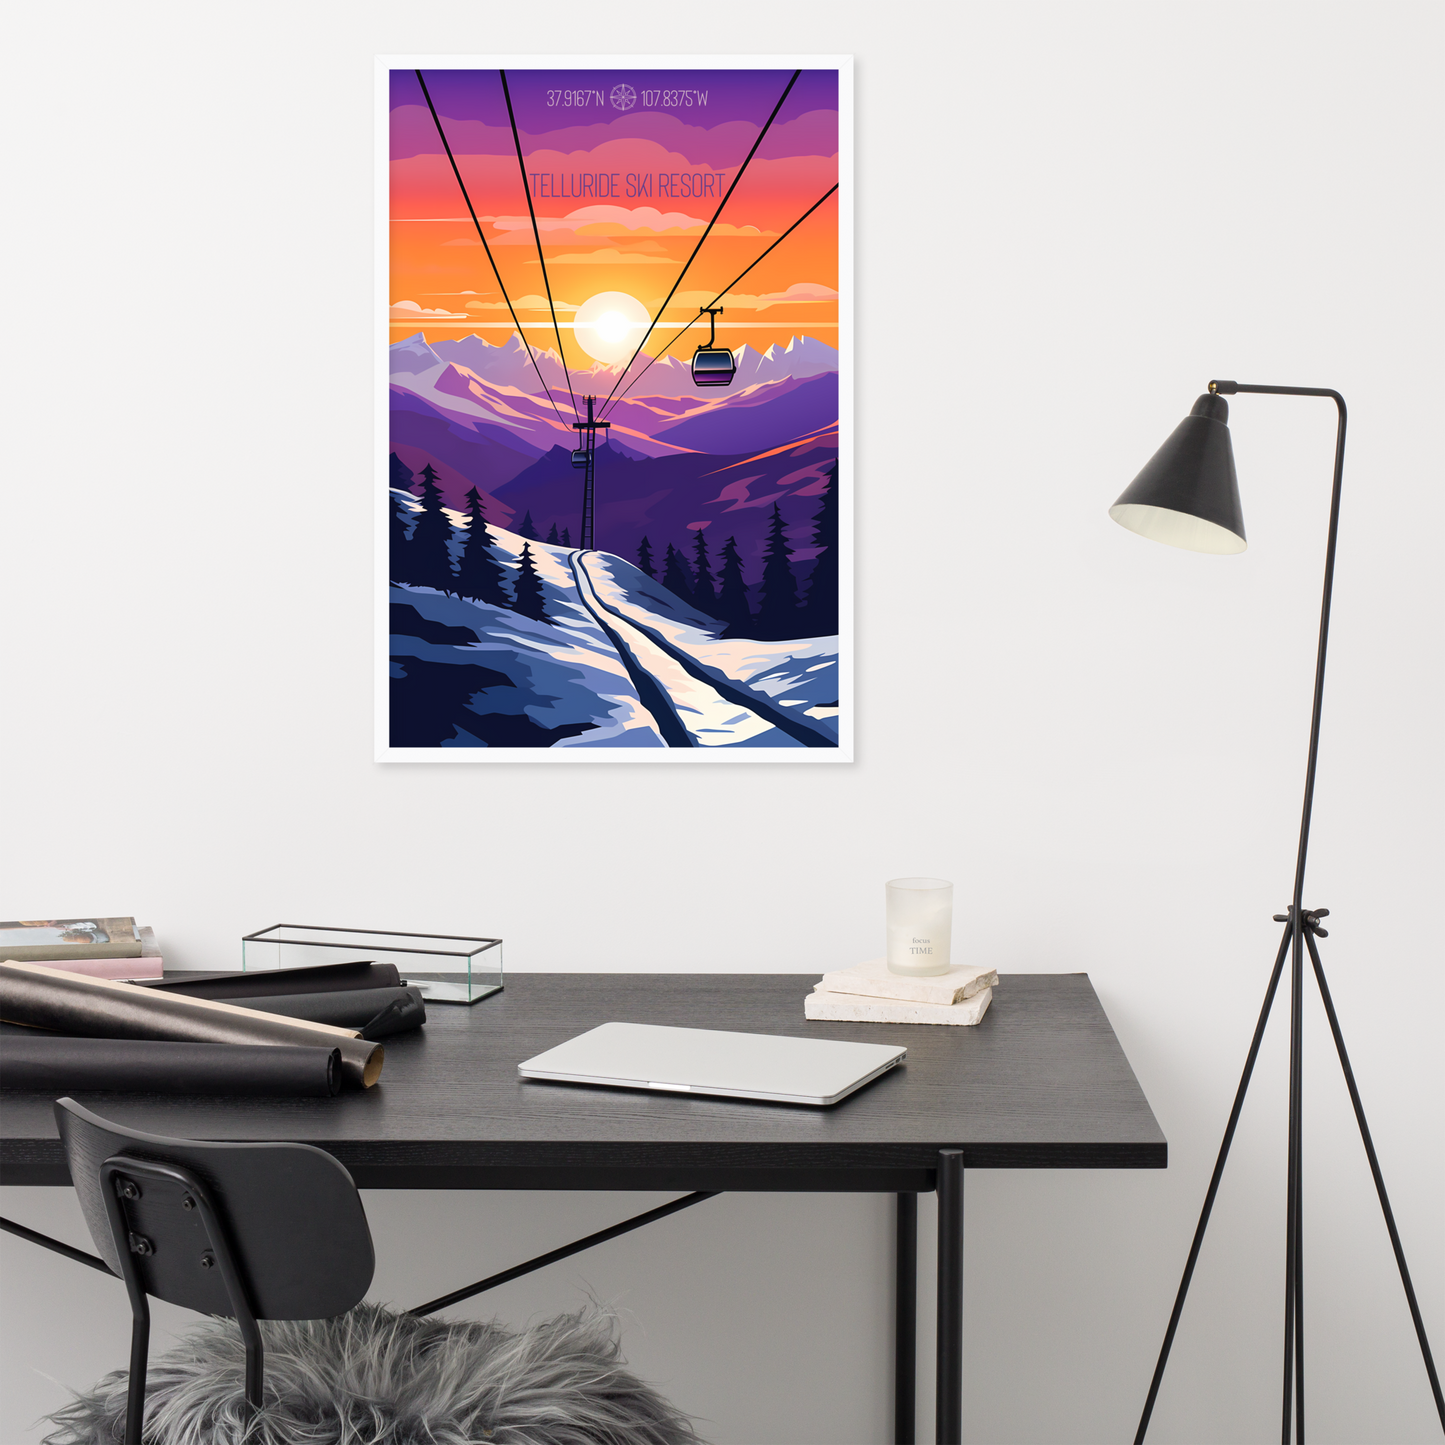 Colorado - Telluride Ski Resort (Framed poster)